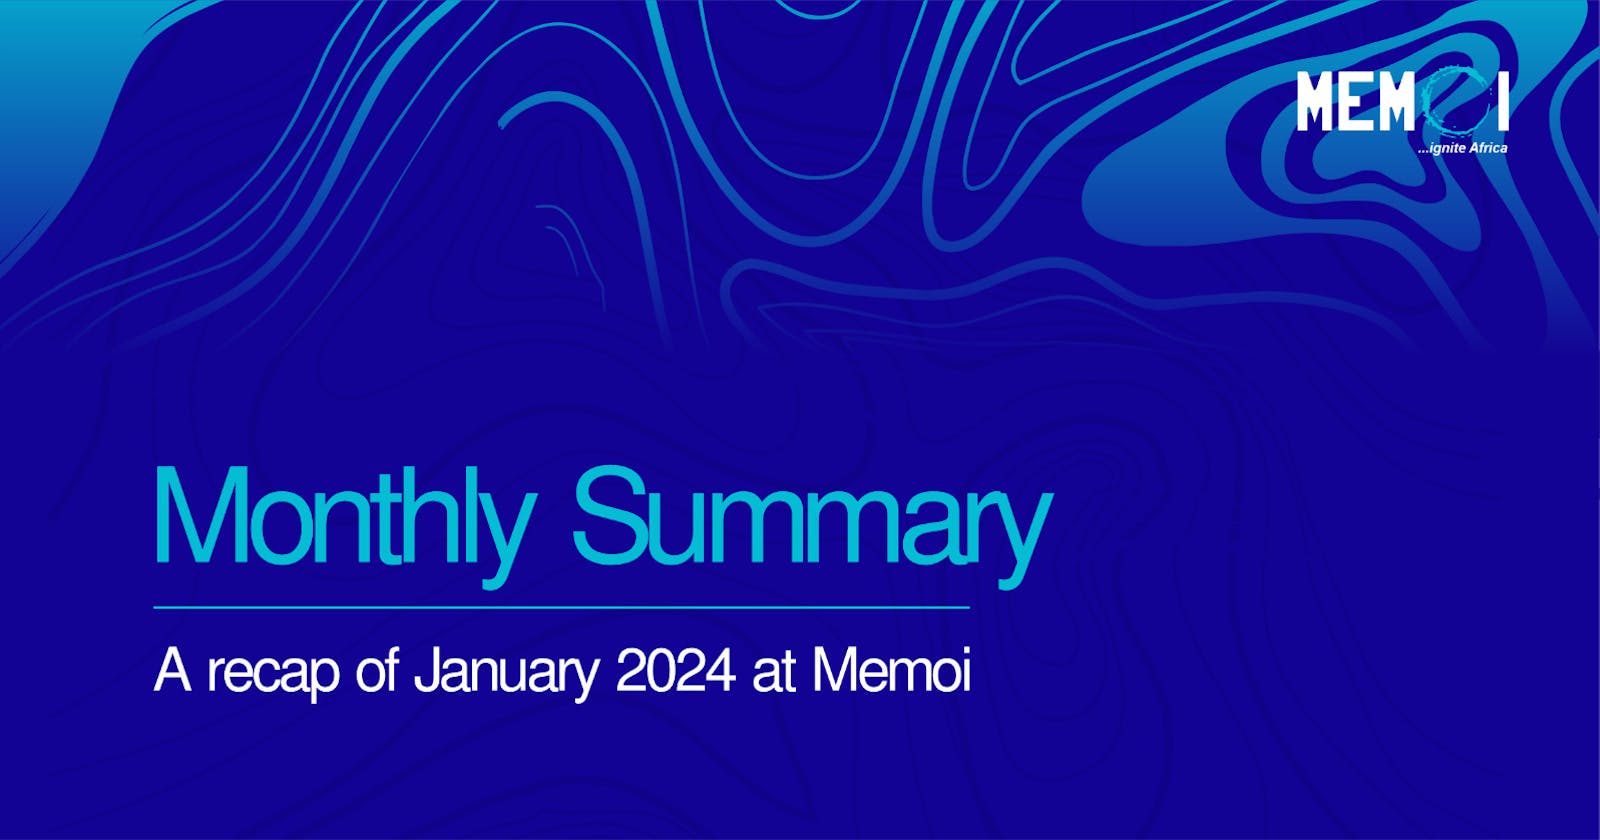 MEMOI AFRICA January 2024 Monthly Summary